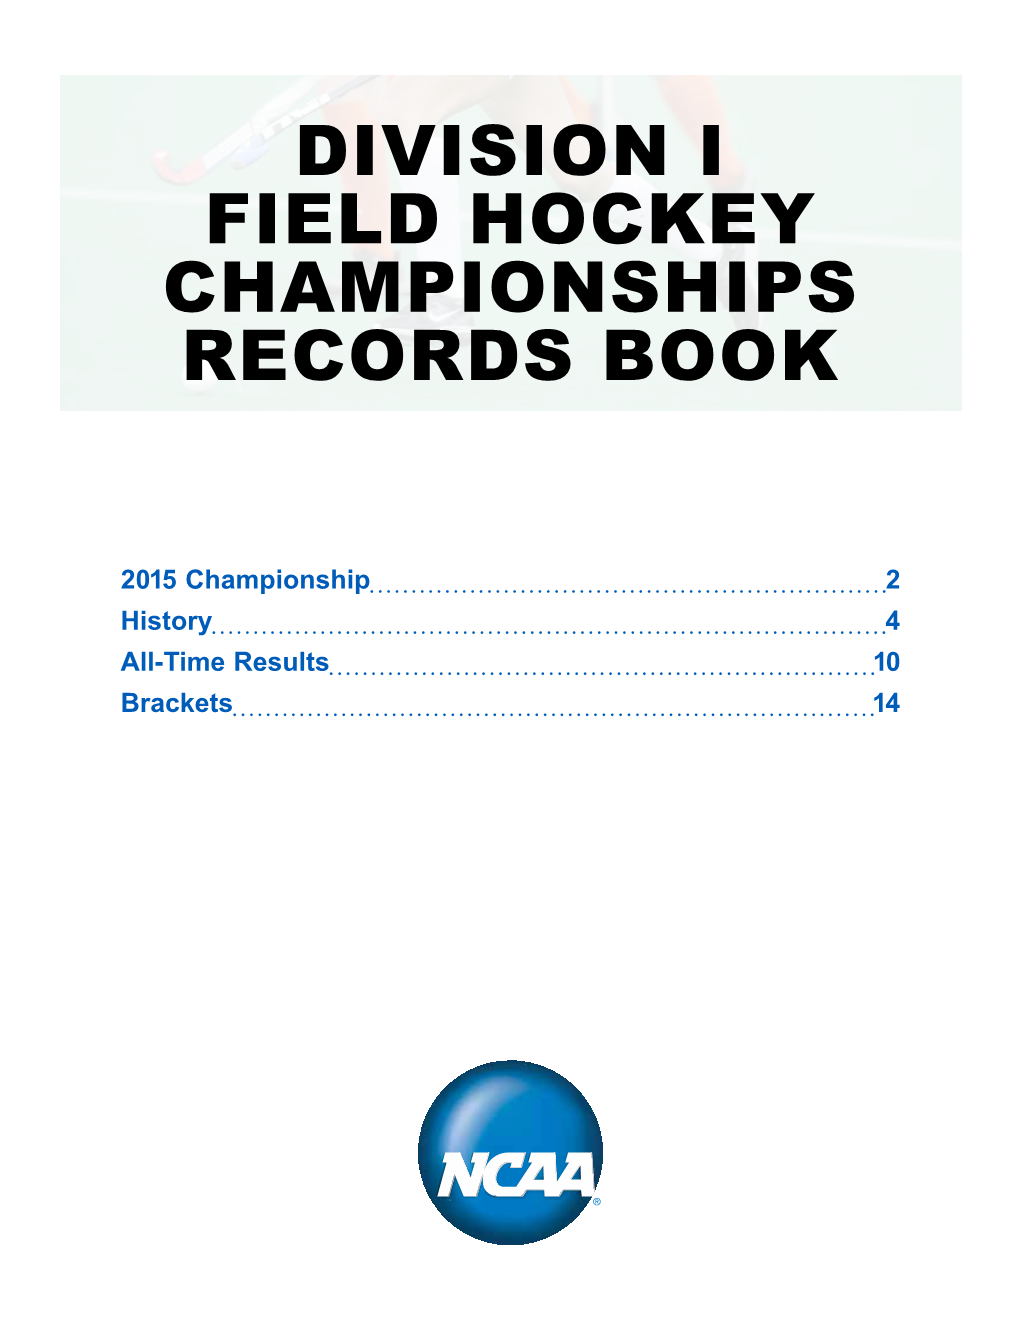 Field Hockey Championships Records Book